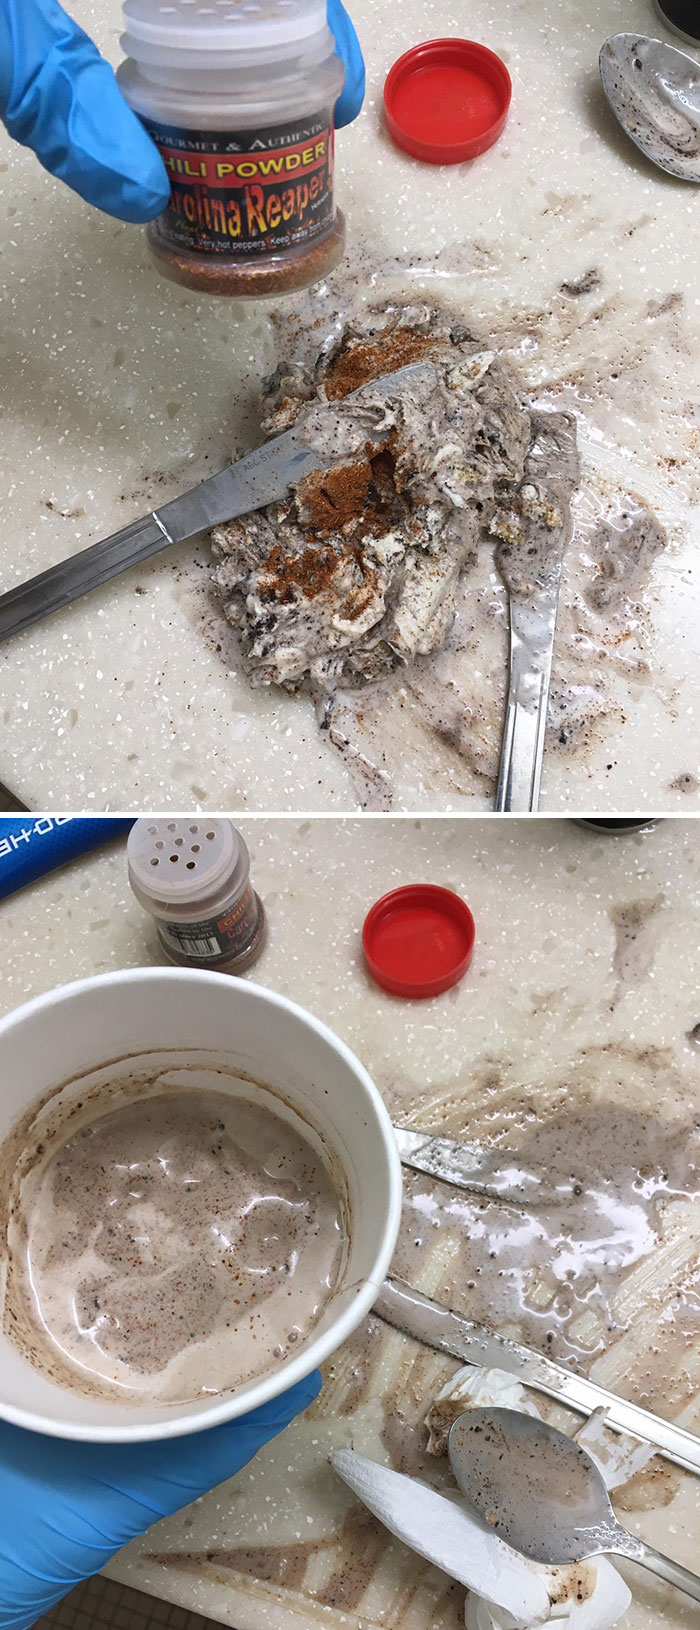 I Mixed Carolina Reaper Powder Into Half A Tub Of Ice Cream As Revenge For Food Thief At My Community Freezer